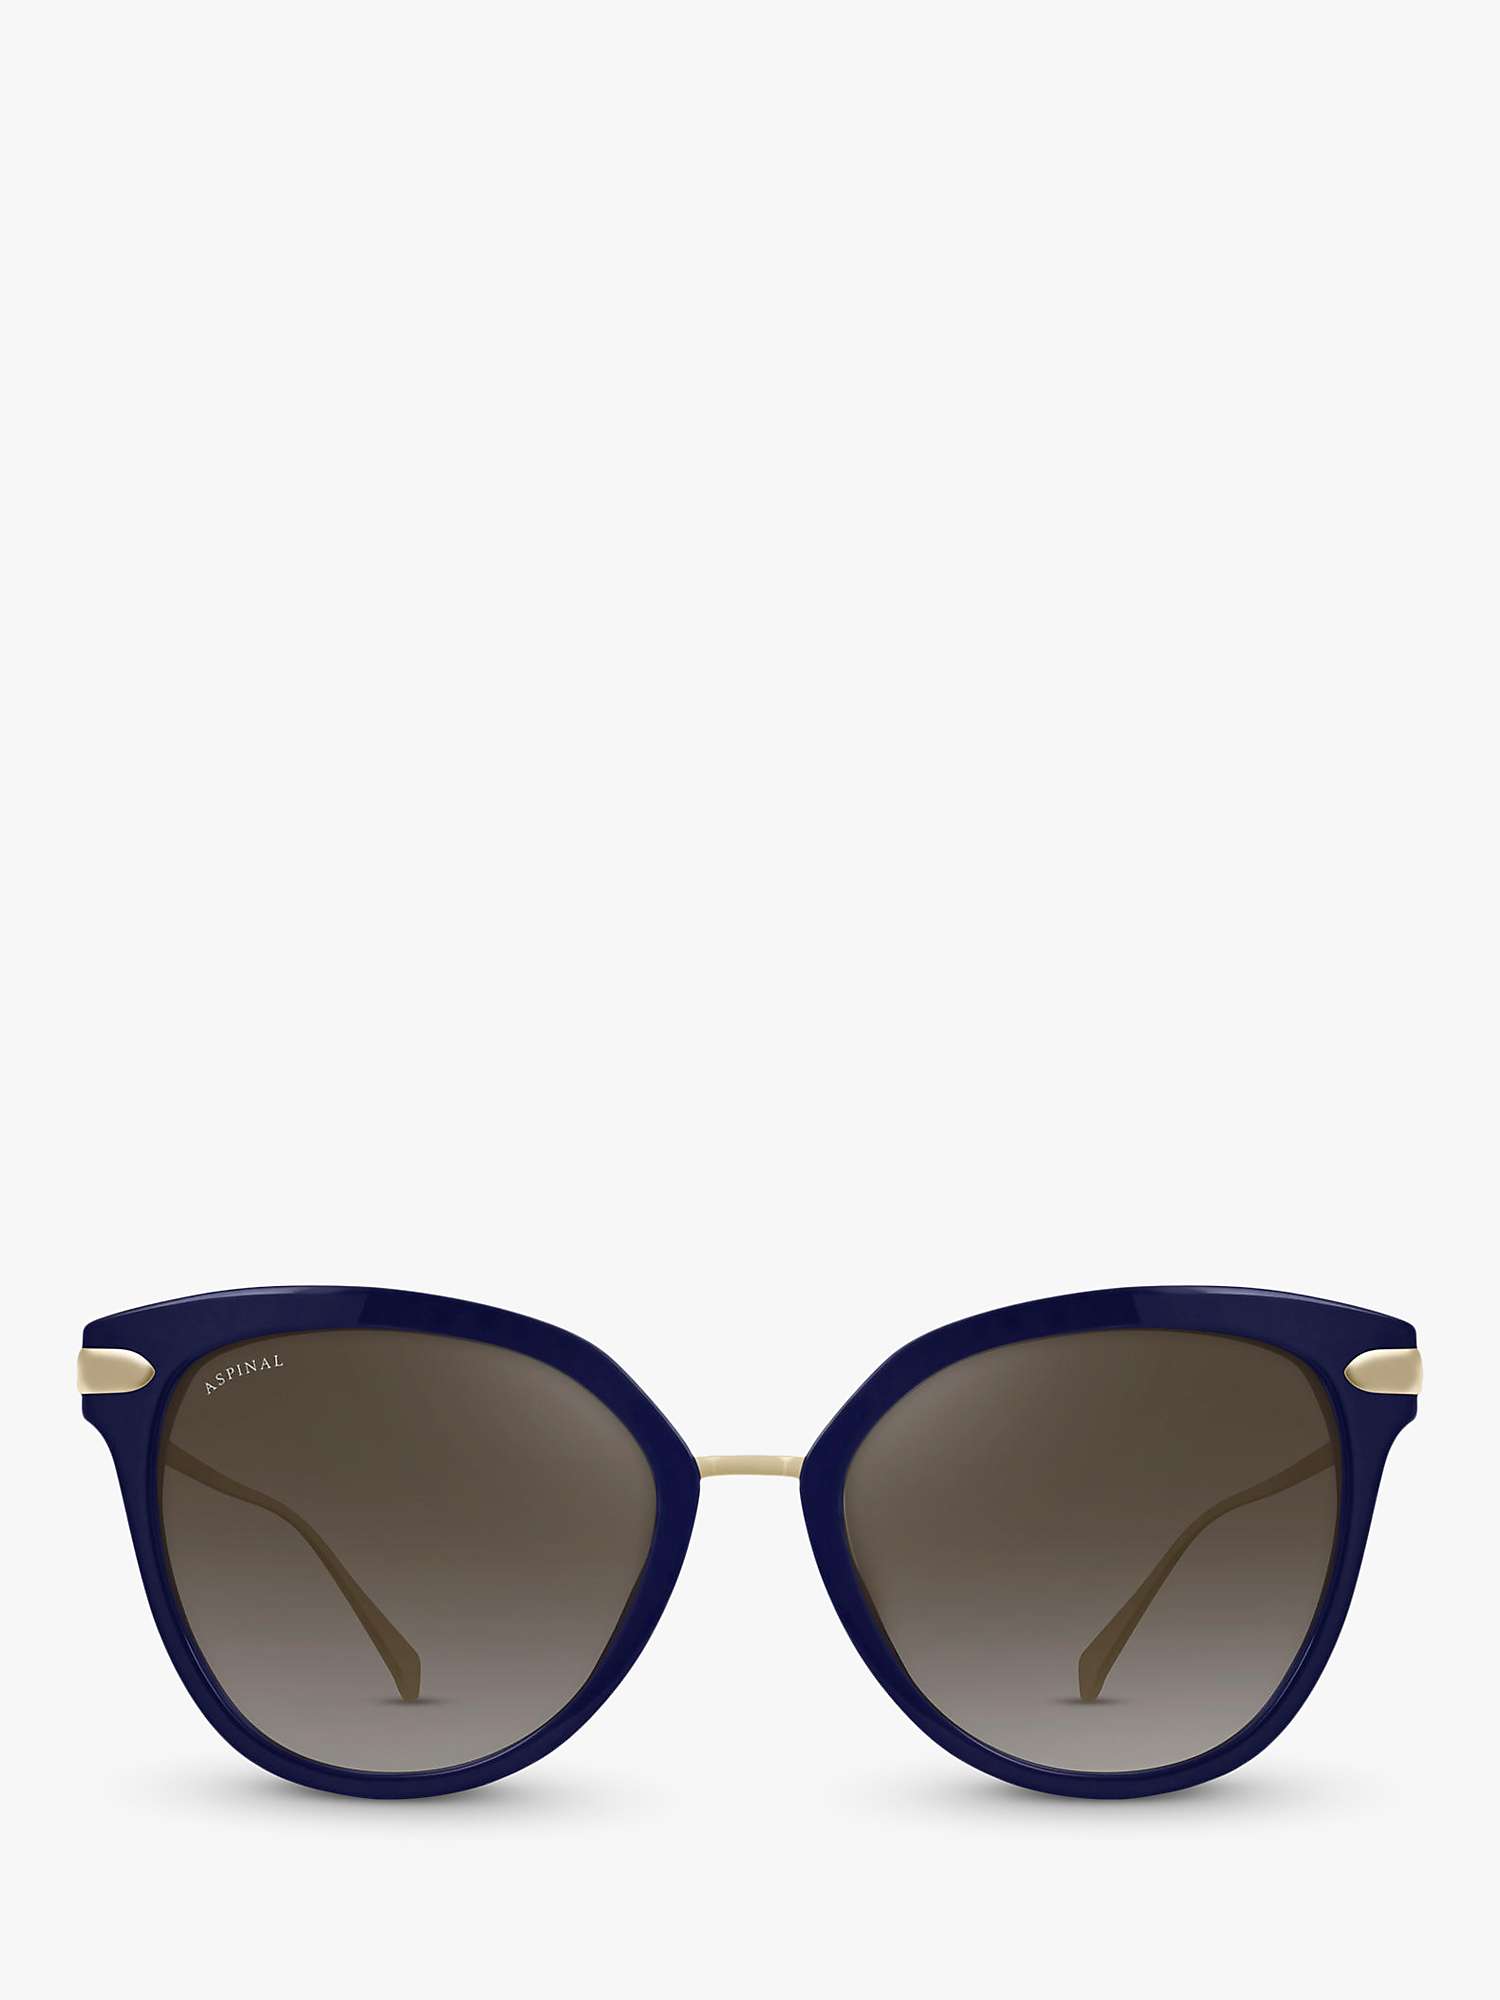 Buy Aspinal of London Women's Cap Ferrat Cat-Eye Frame Sunglasses Online at johnlewis.com